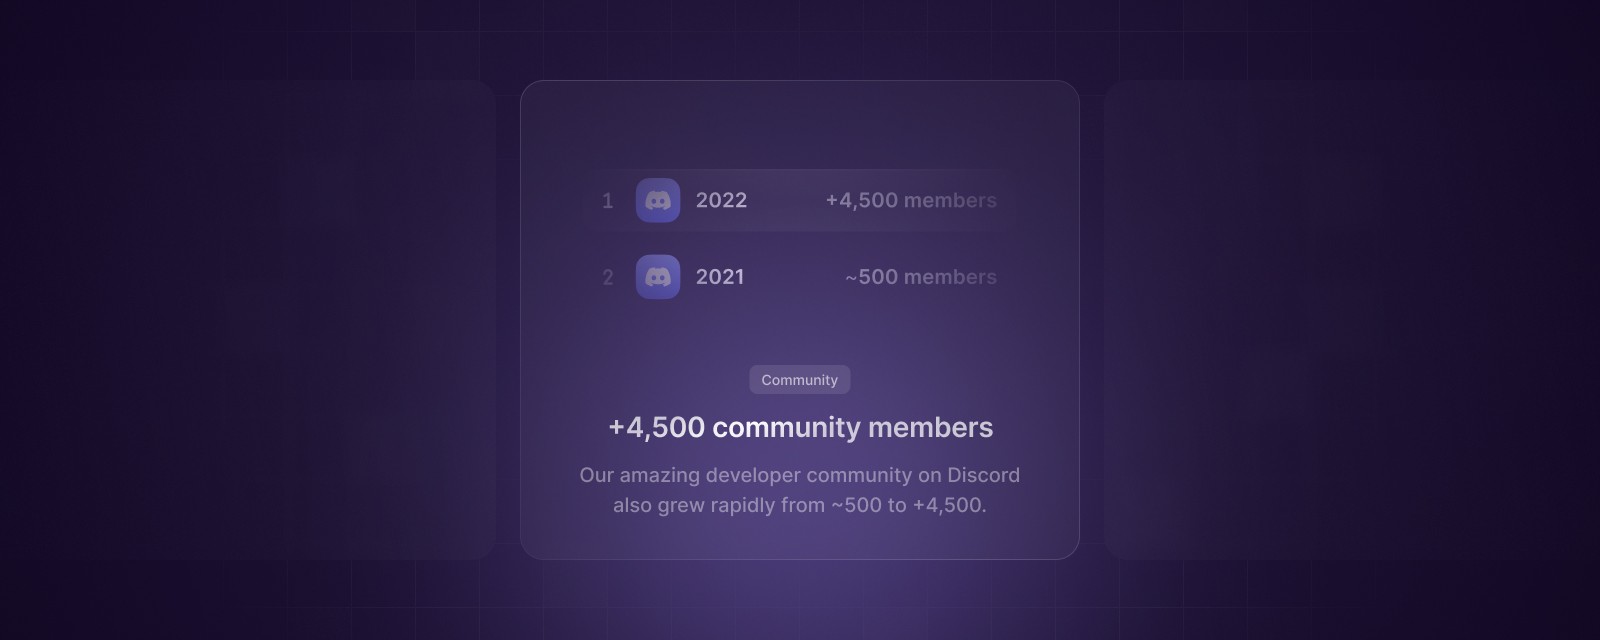 +4,500 community members
